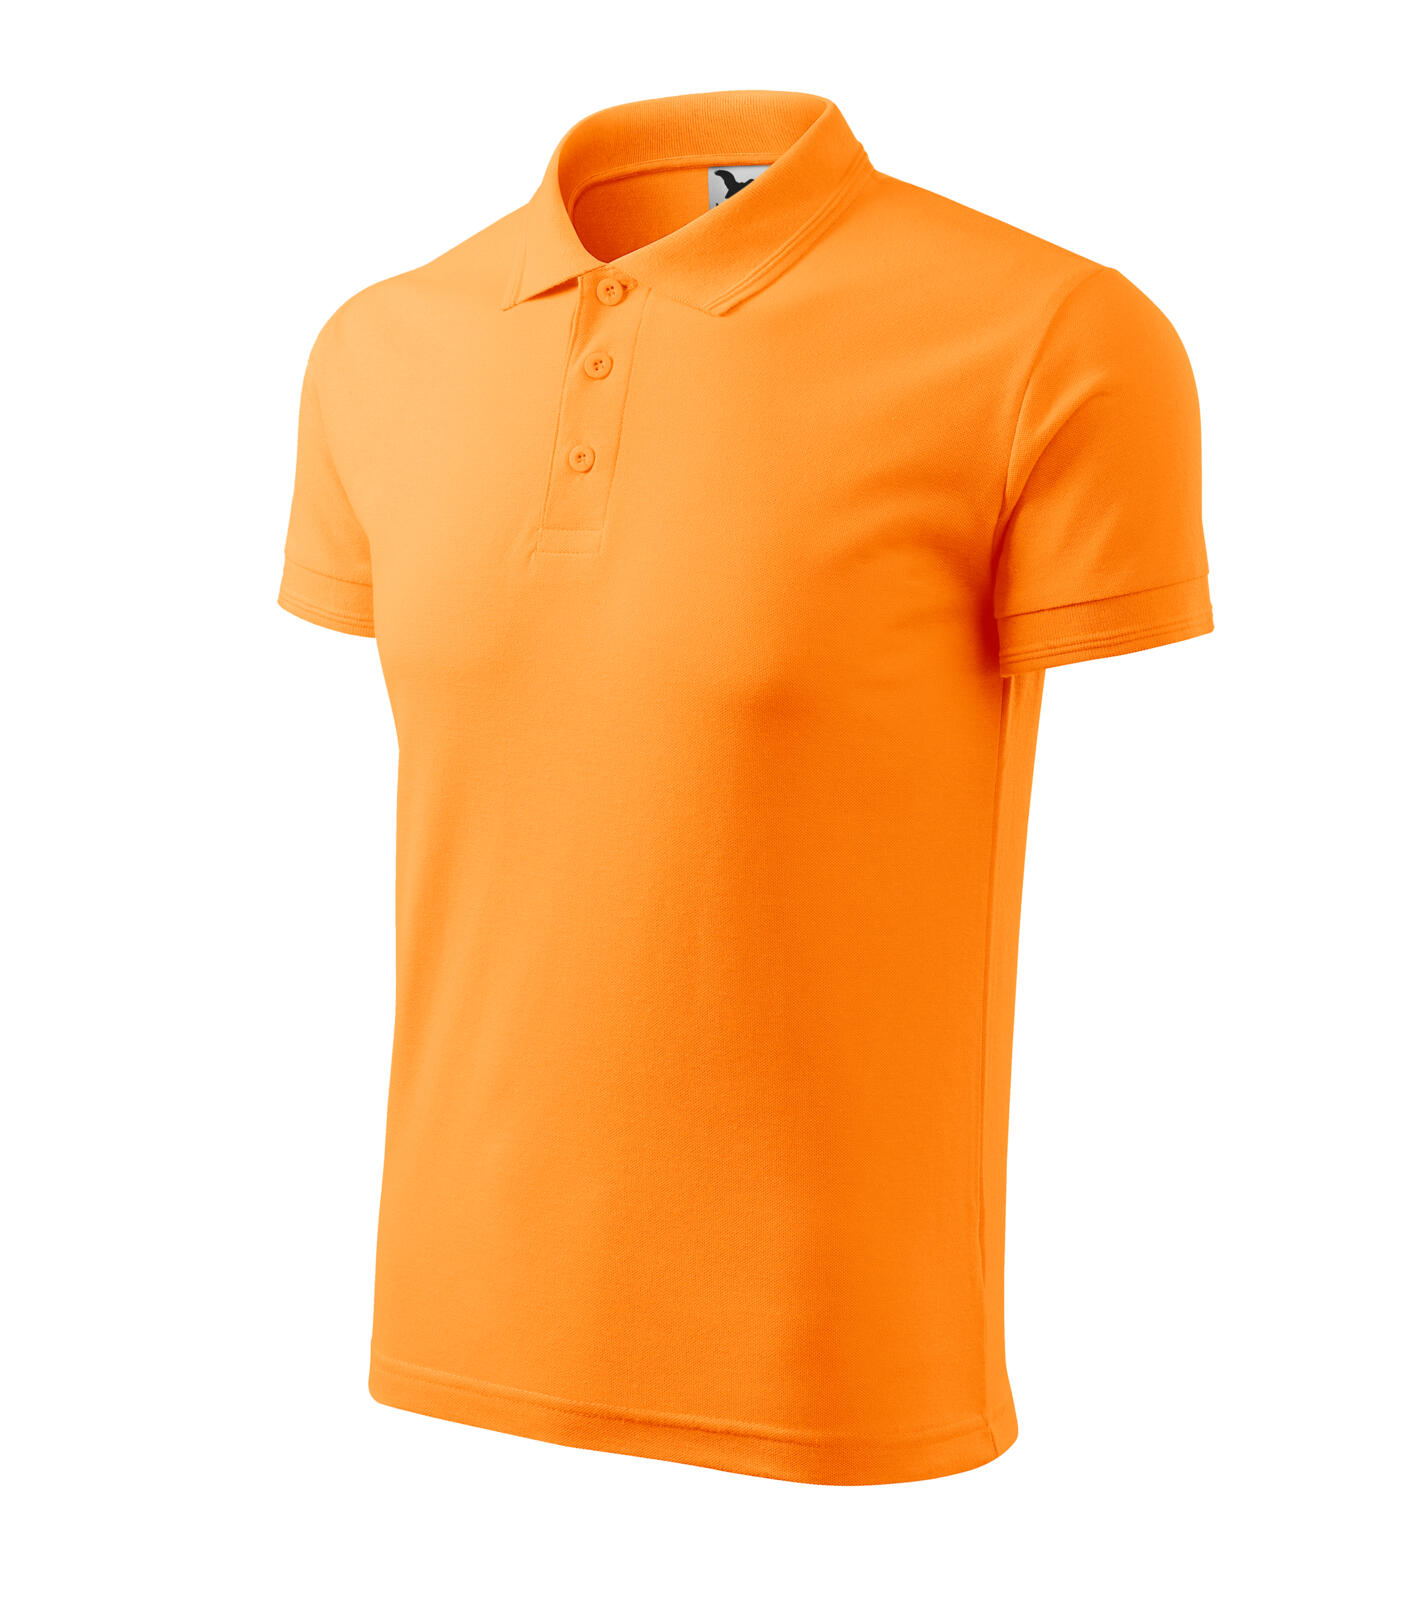 Pique Polo Polokošile pánská Barva: tangerine orange, Velikost: M